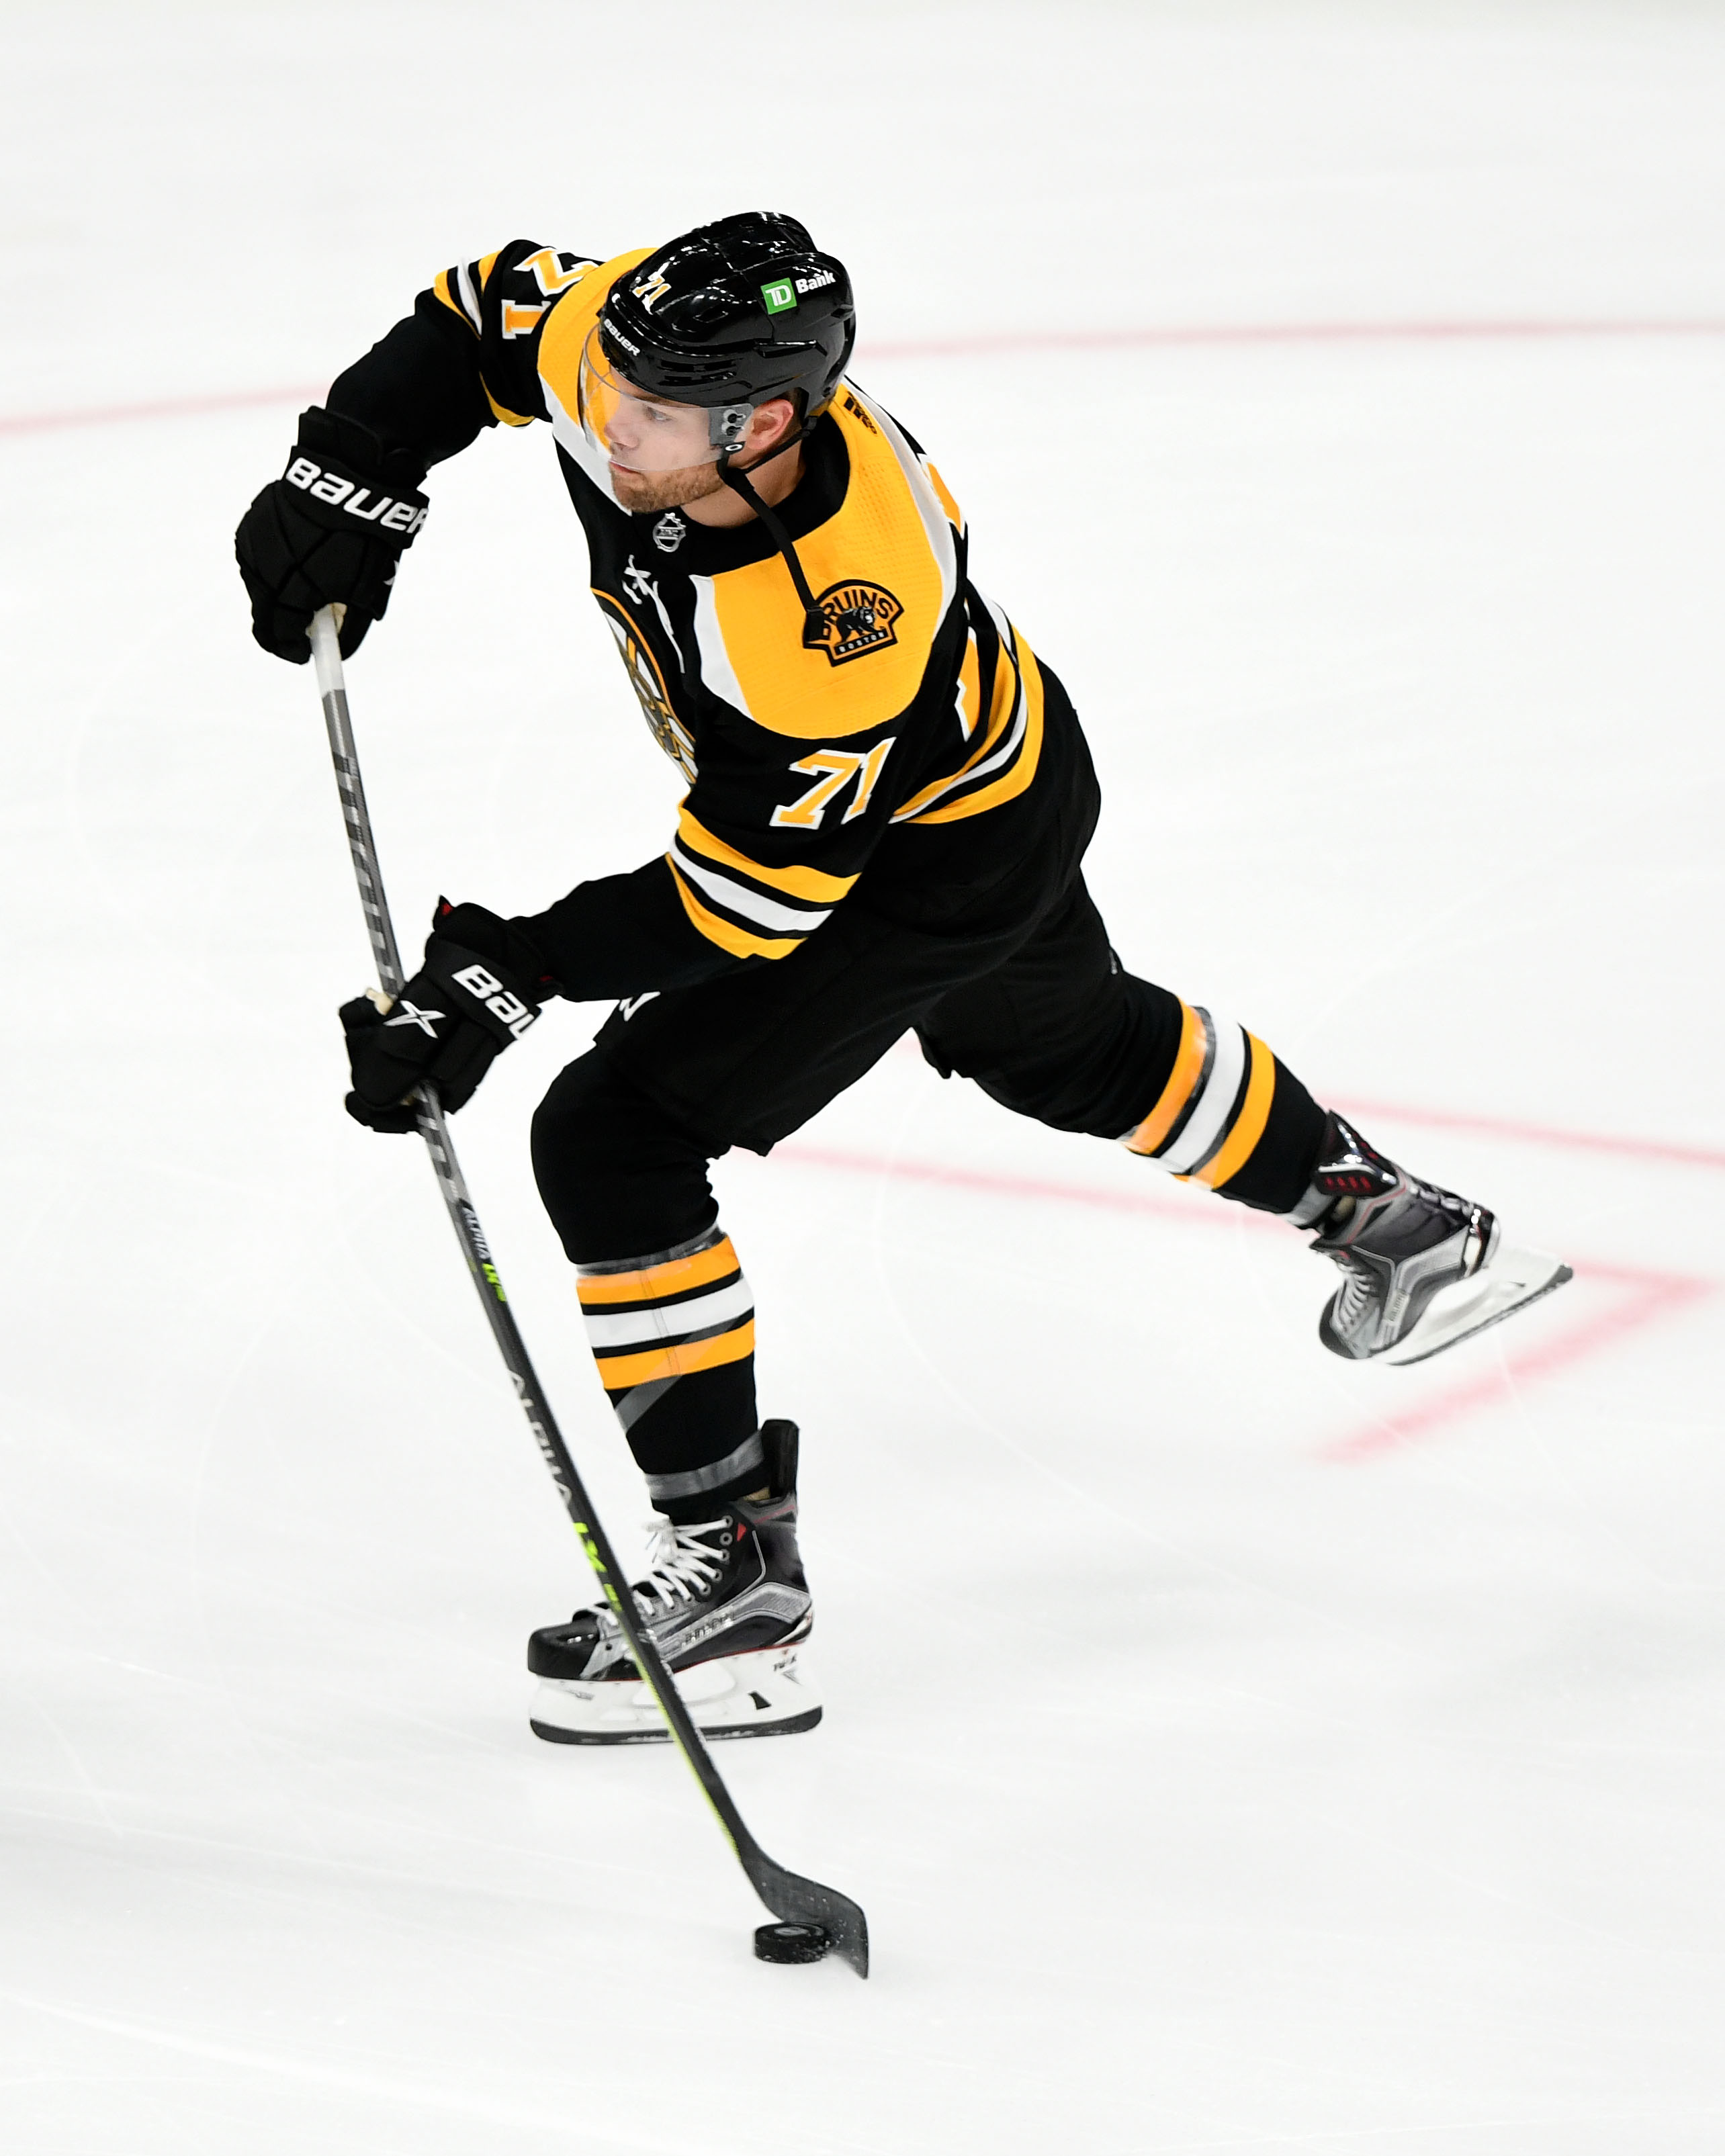 Taylor Hall Signed PhotoGlass Framed Boston Bruins Stickblade